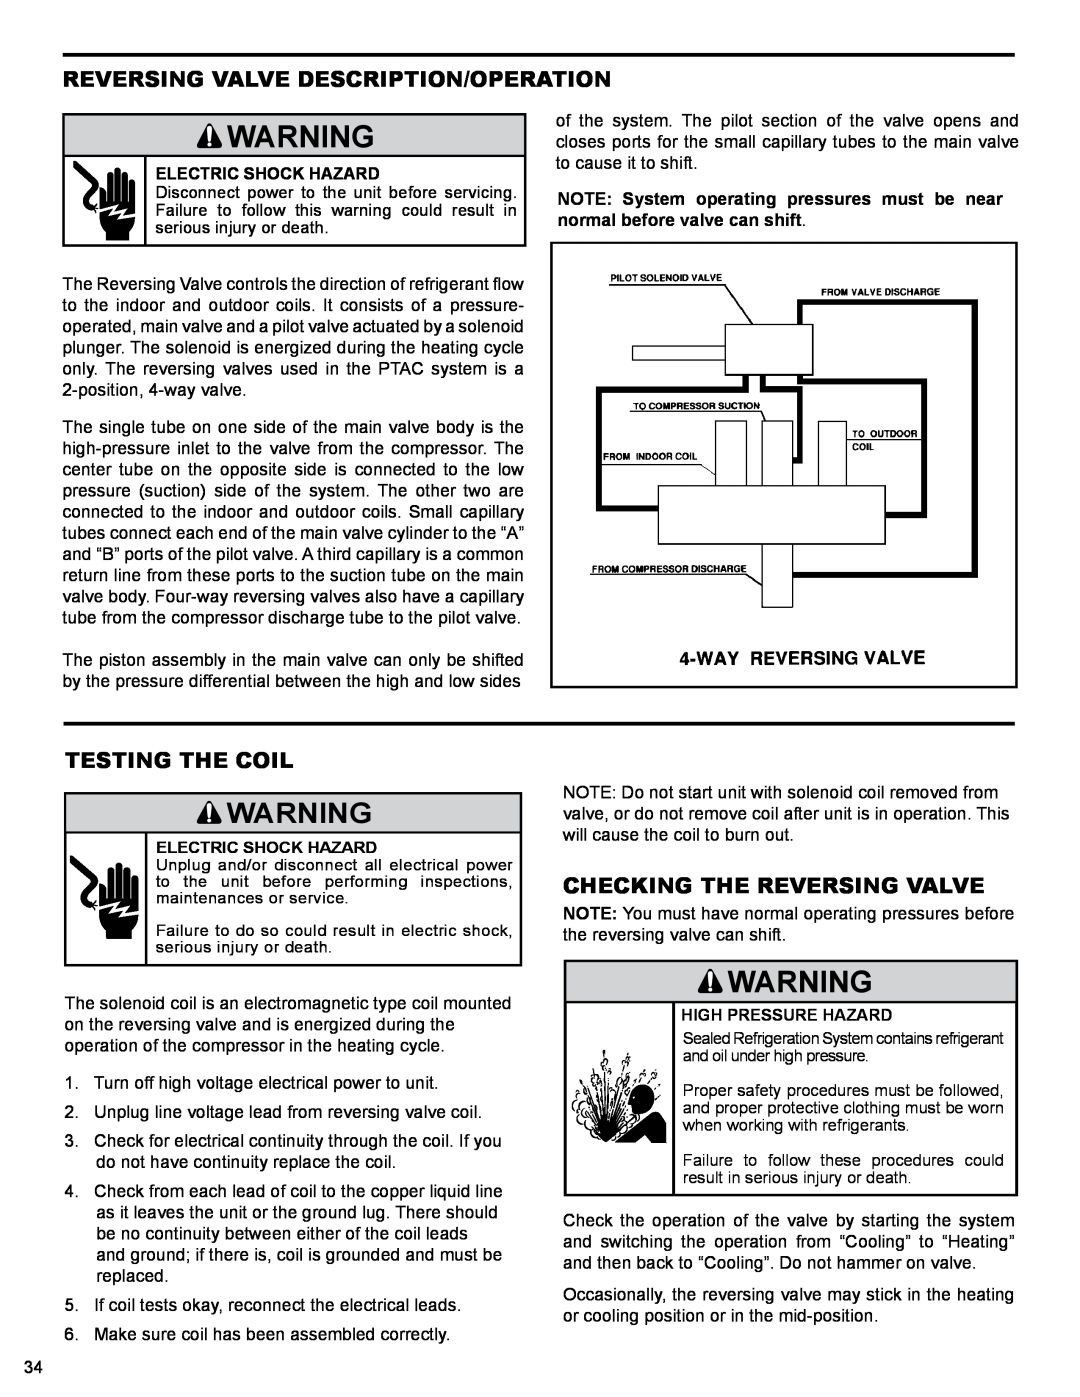 Friedrich PTAC - R410A service manual Reversing Valve Description/Operation, Testing The Coil, Checking The Reversing Valve 